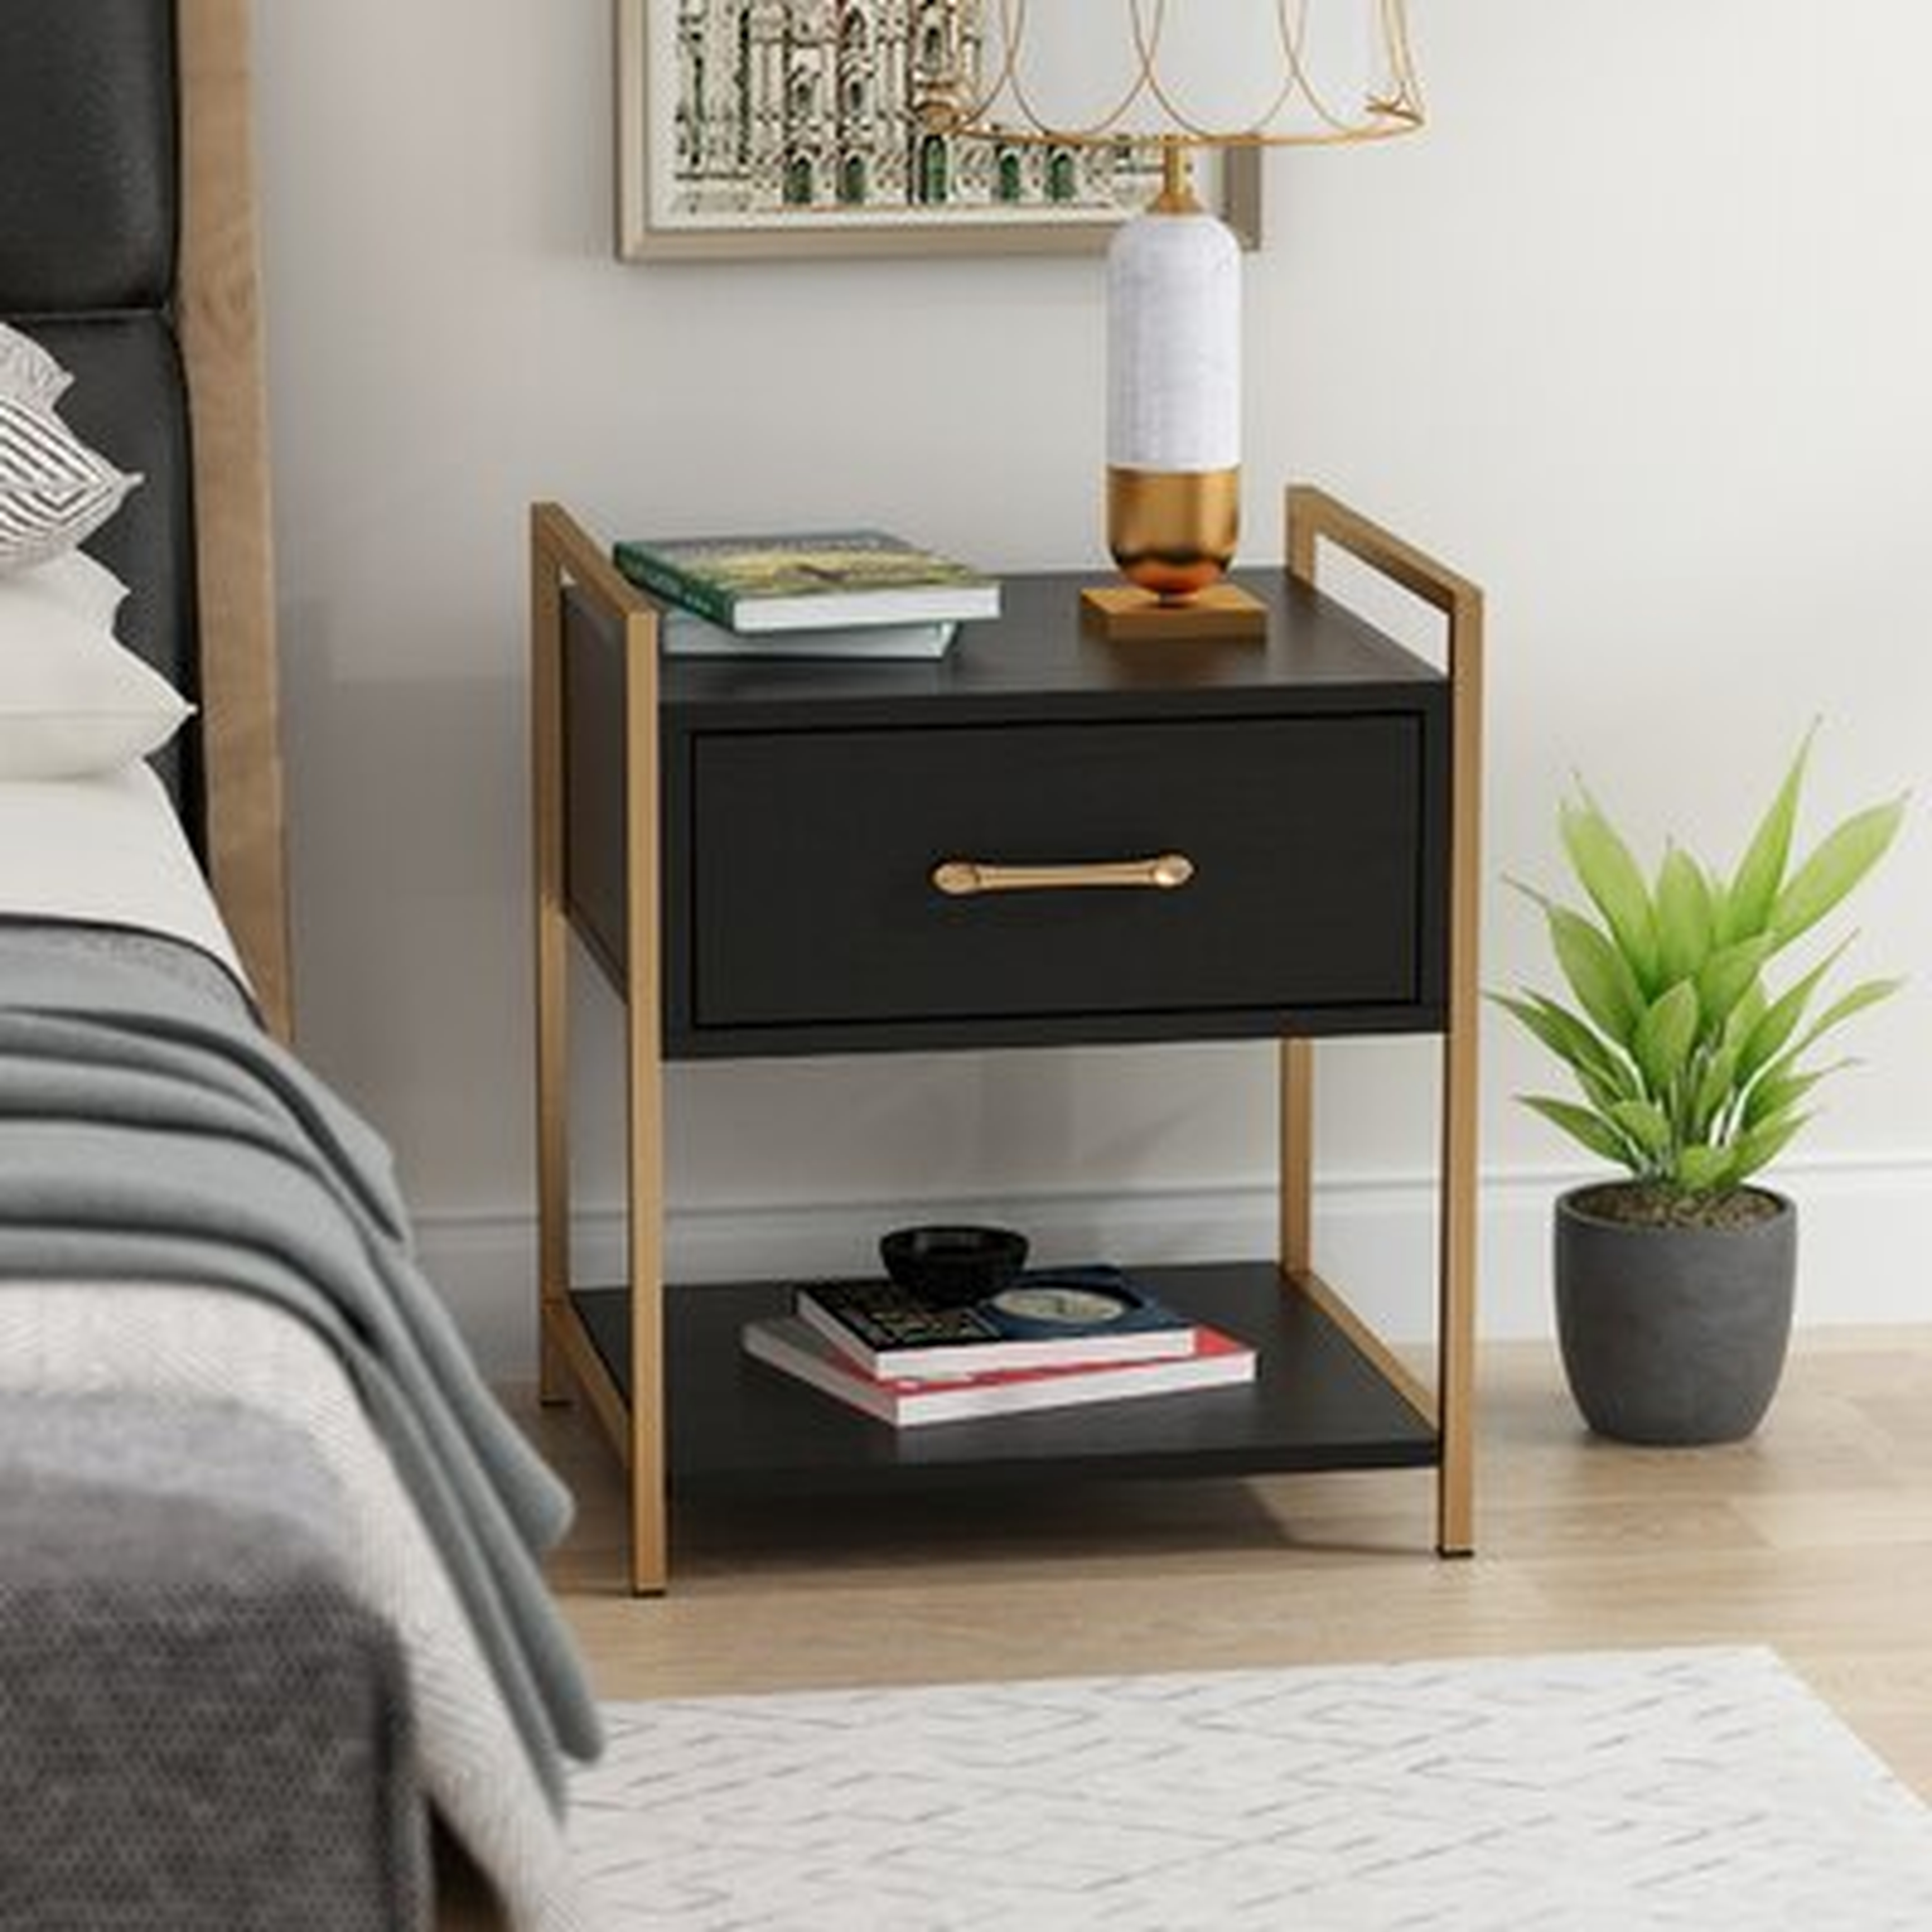 Modern Style Single Drawer Nightstand With Storage Shelf - Wayfair